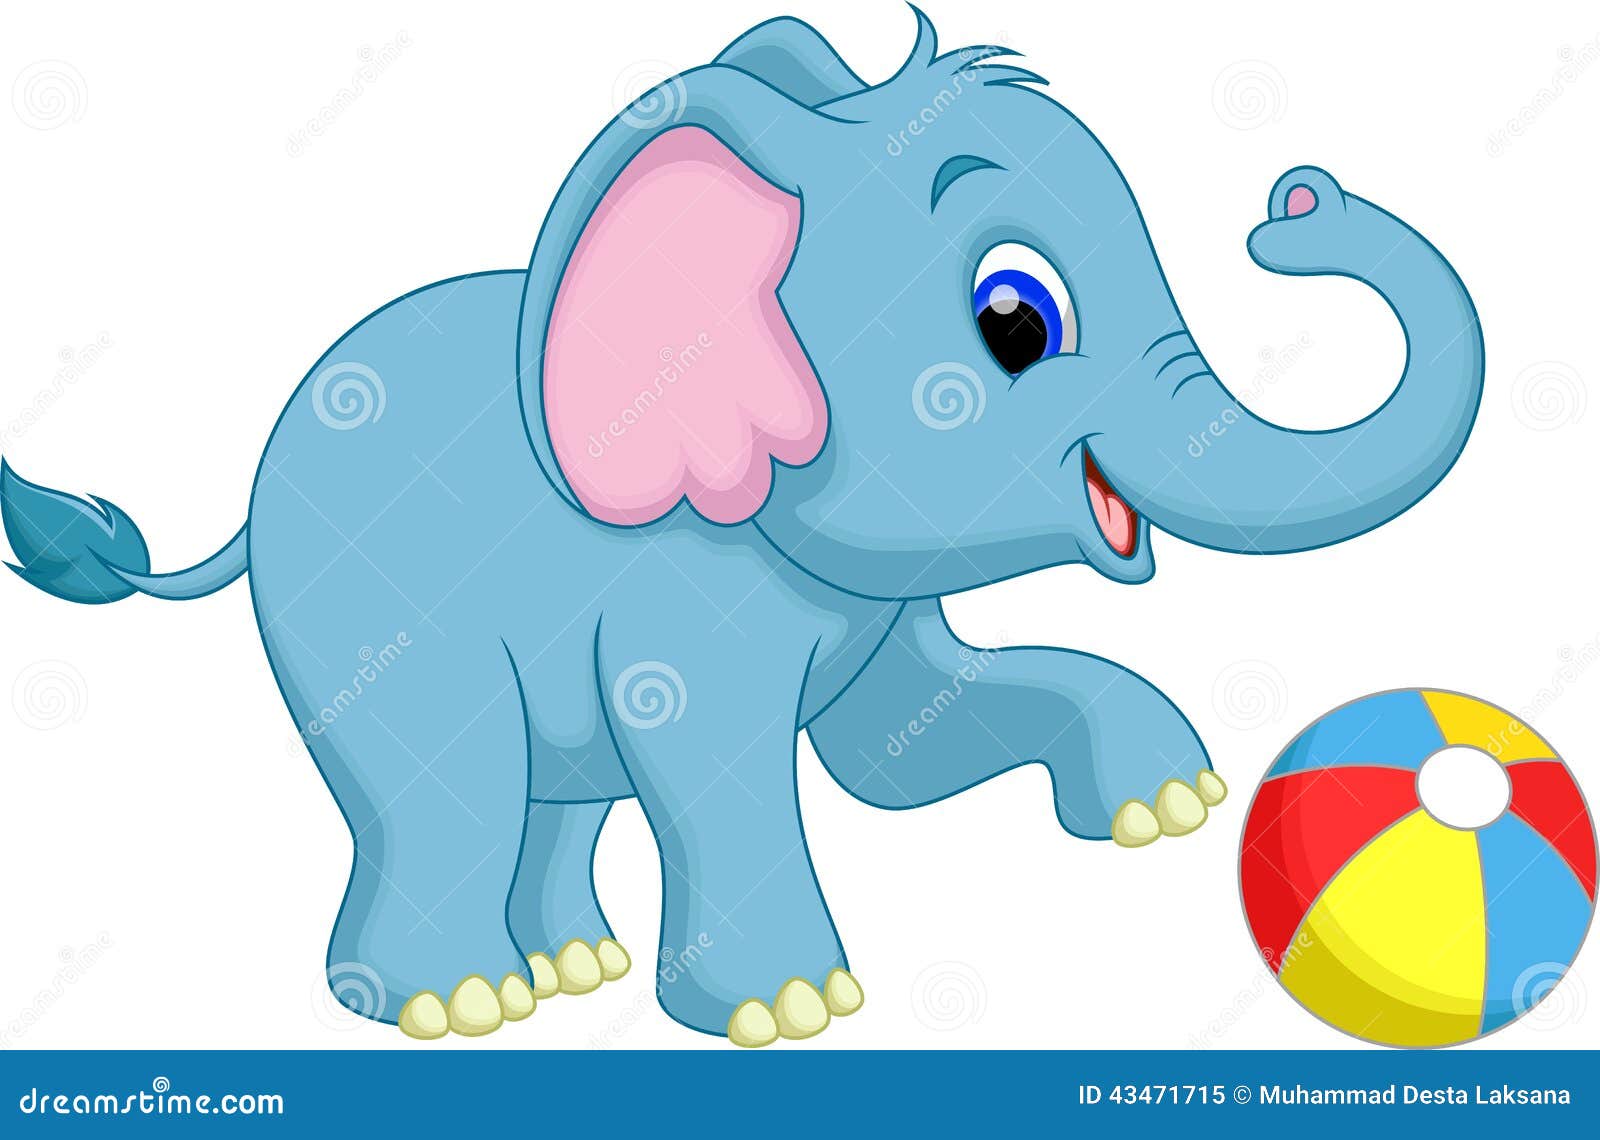 Cute baby elephant cartoon stock illustration. Illustration of design -  43471715